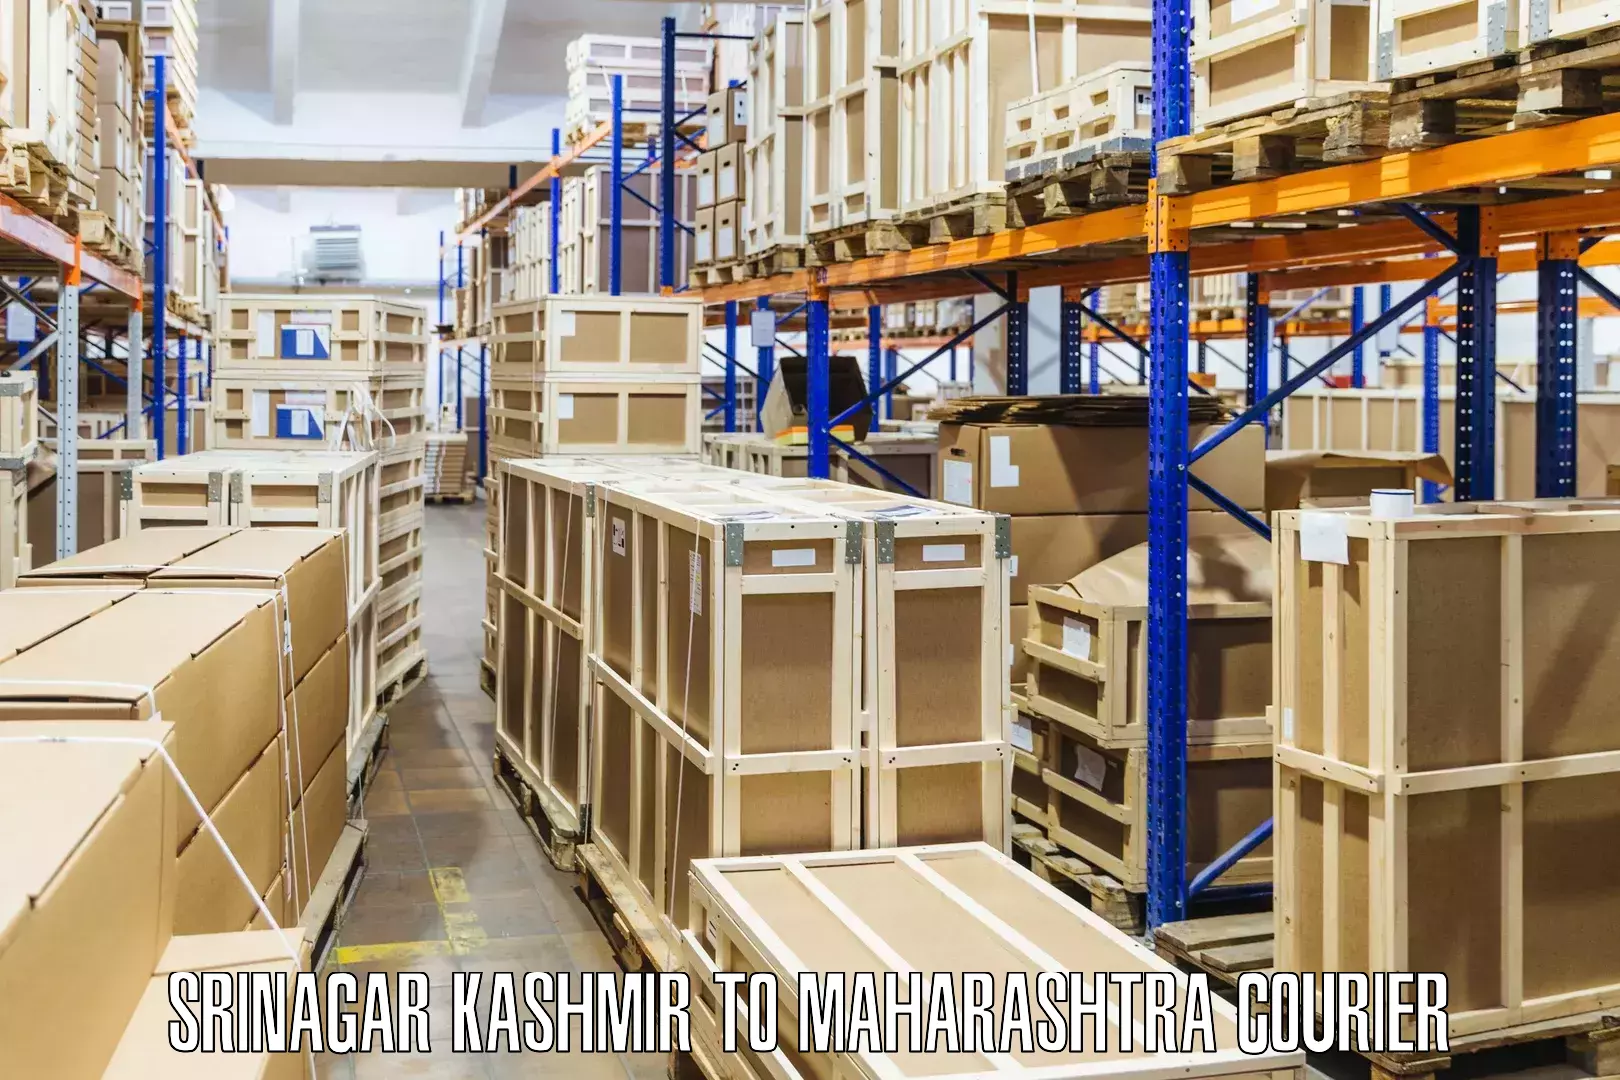 24-hour courier service Srinagar Kashmir to Hingoli